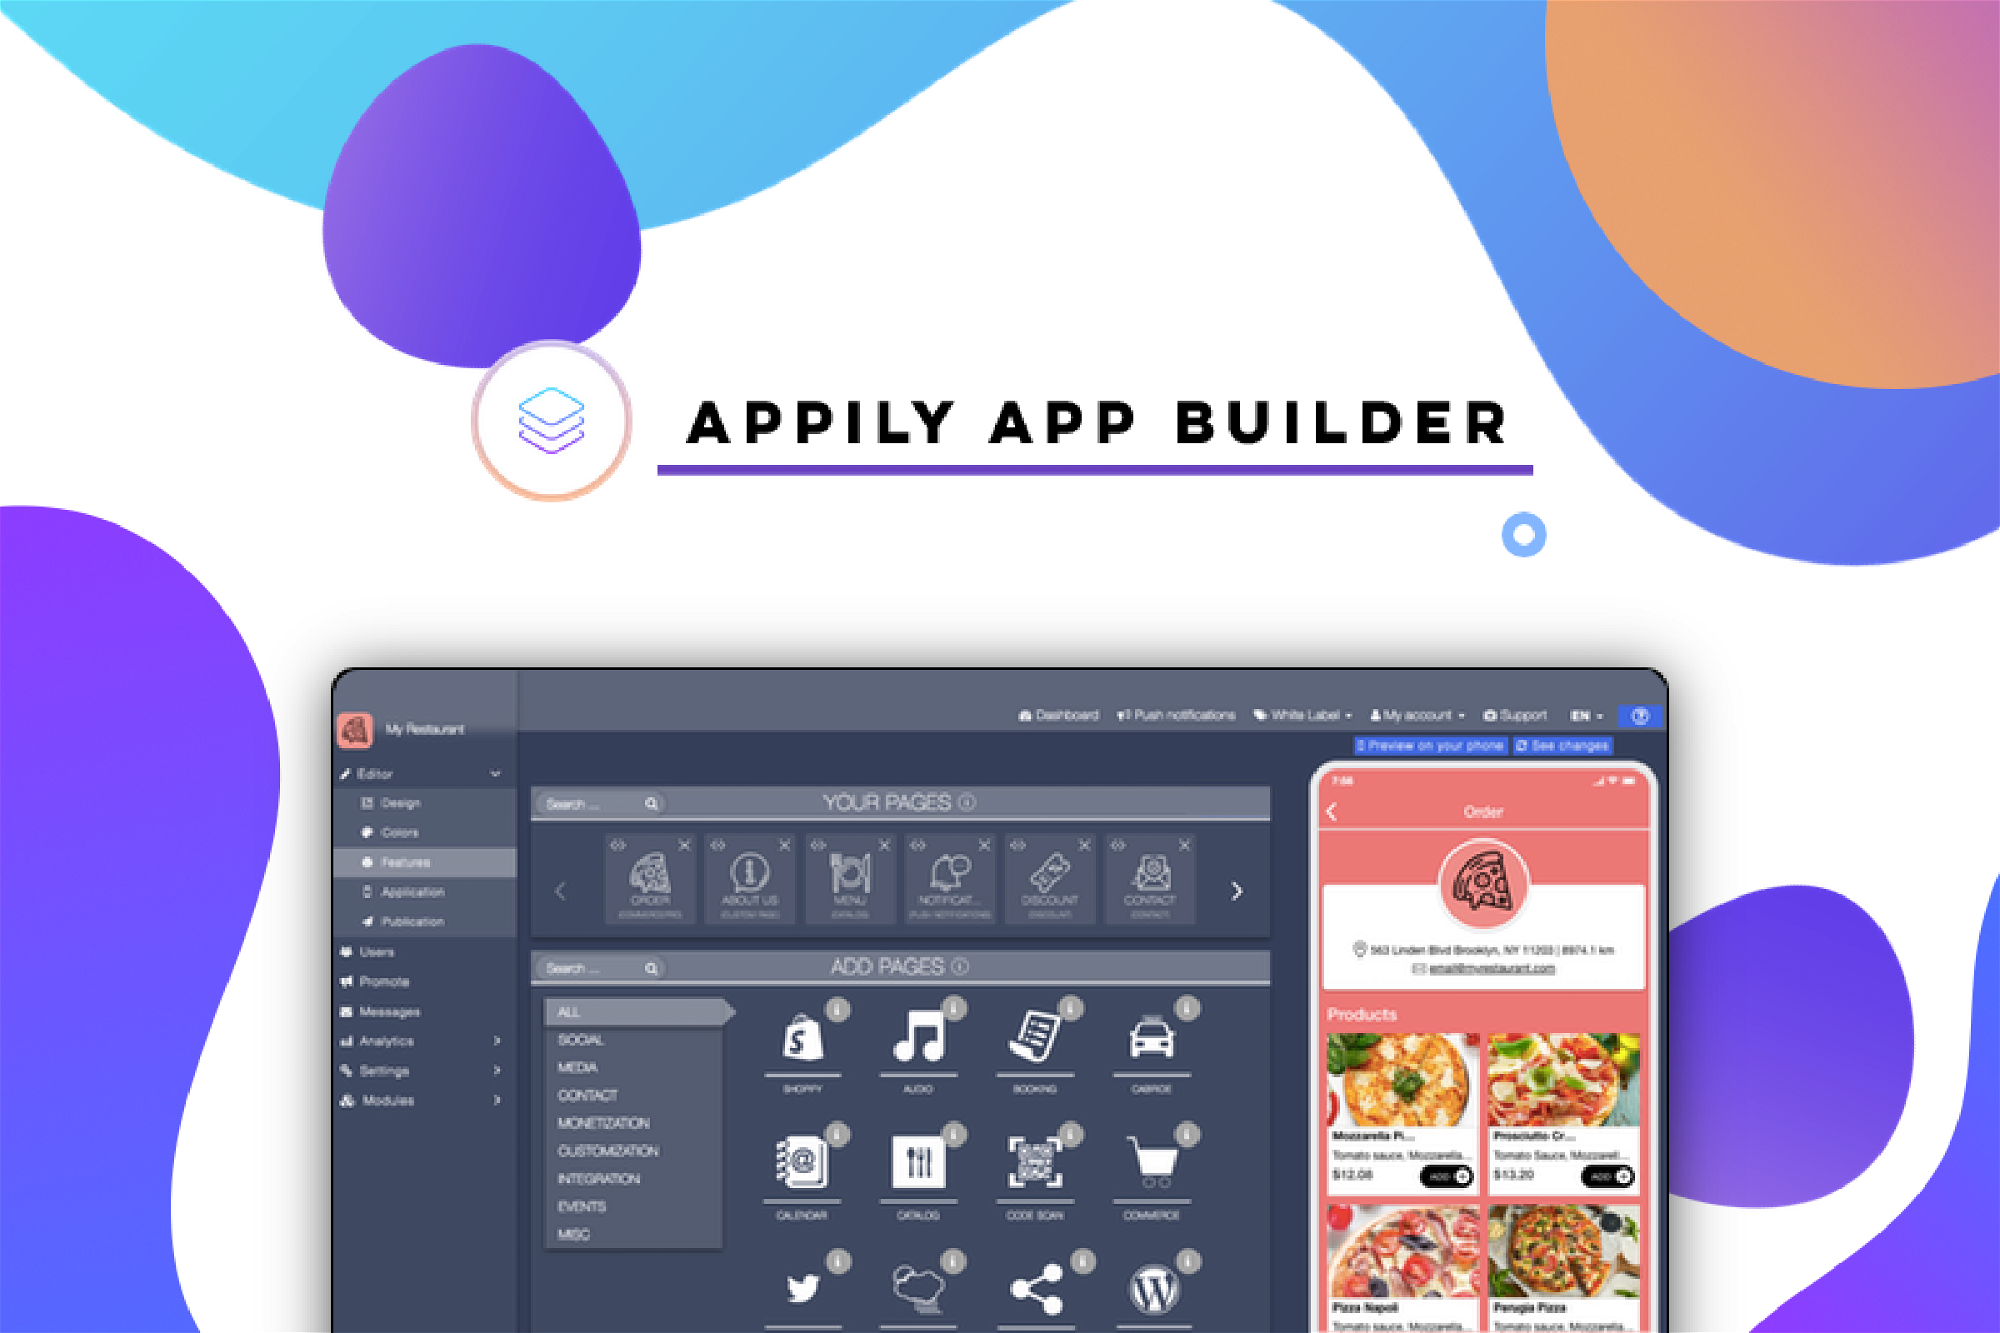 Appily App Builder